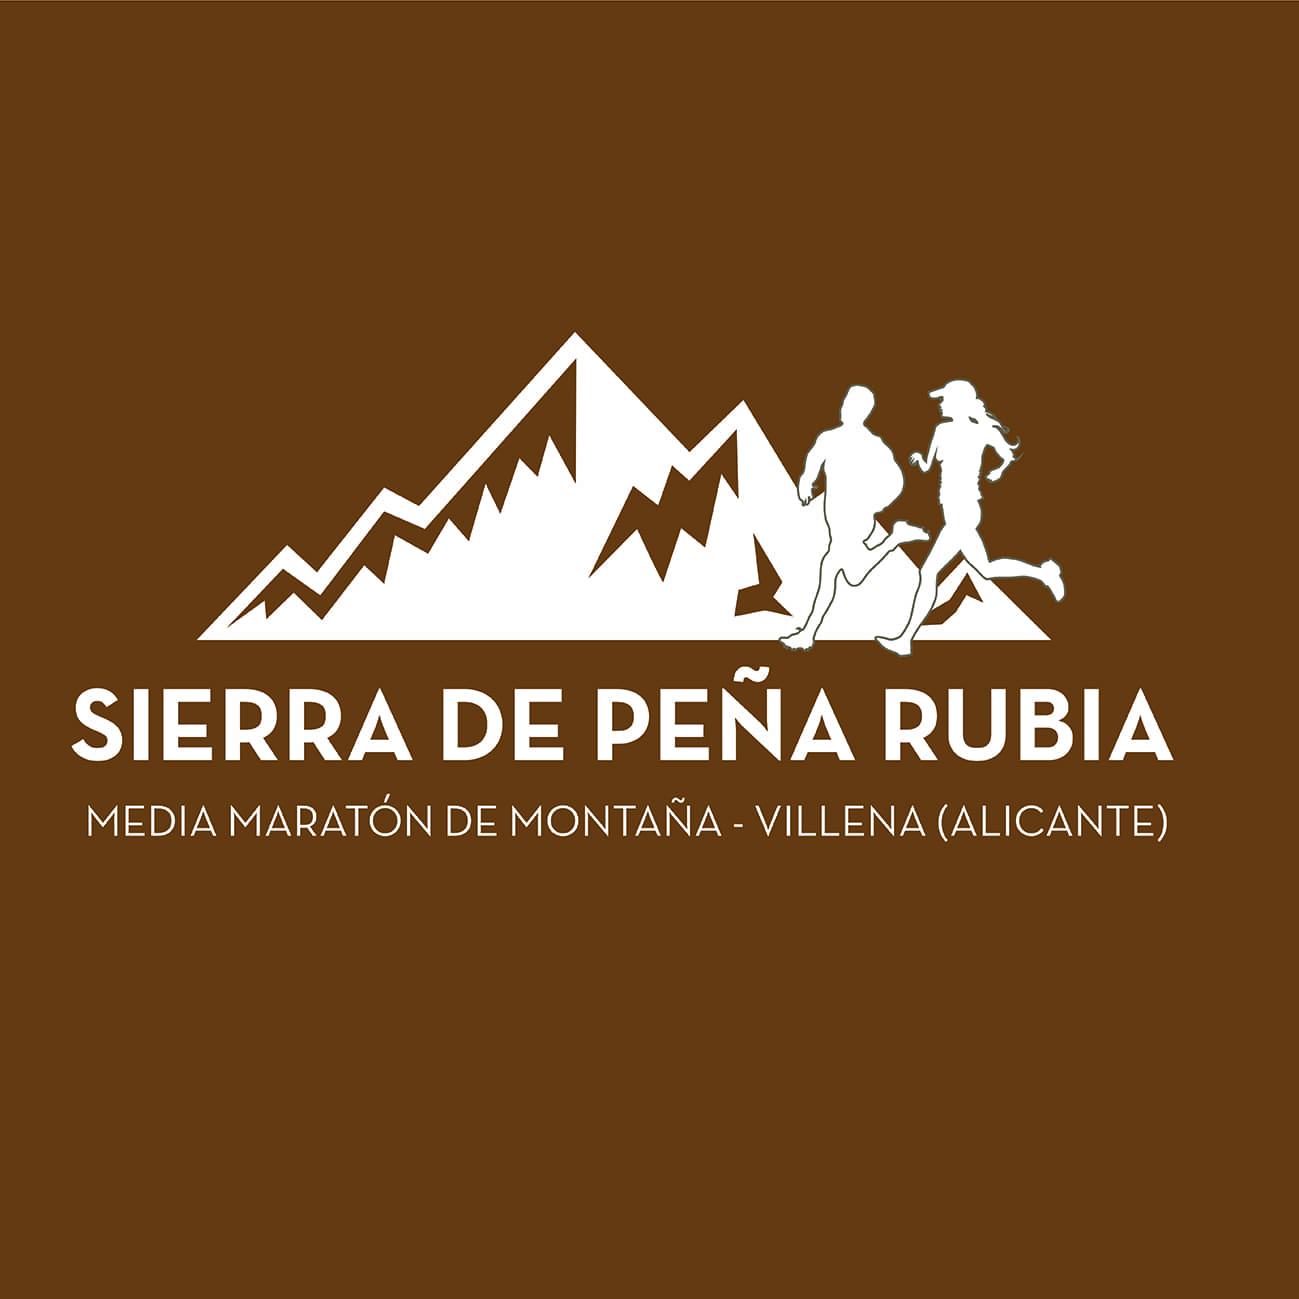 Trail Villena organiza la media maratón de montaña “Sierra de Peña Rubia”